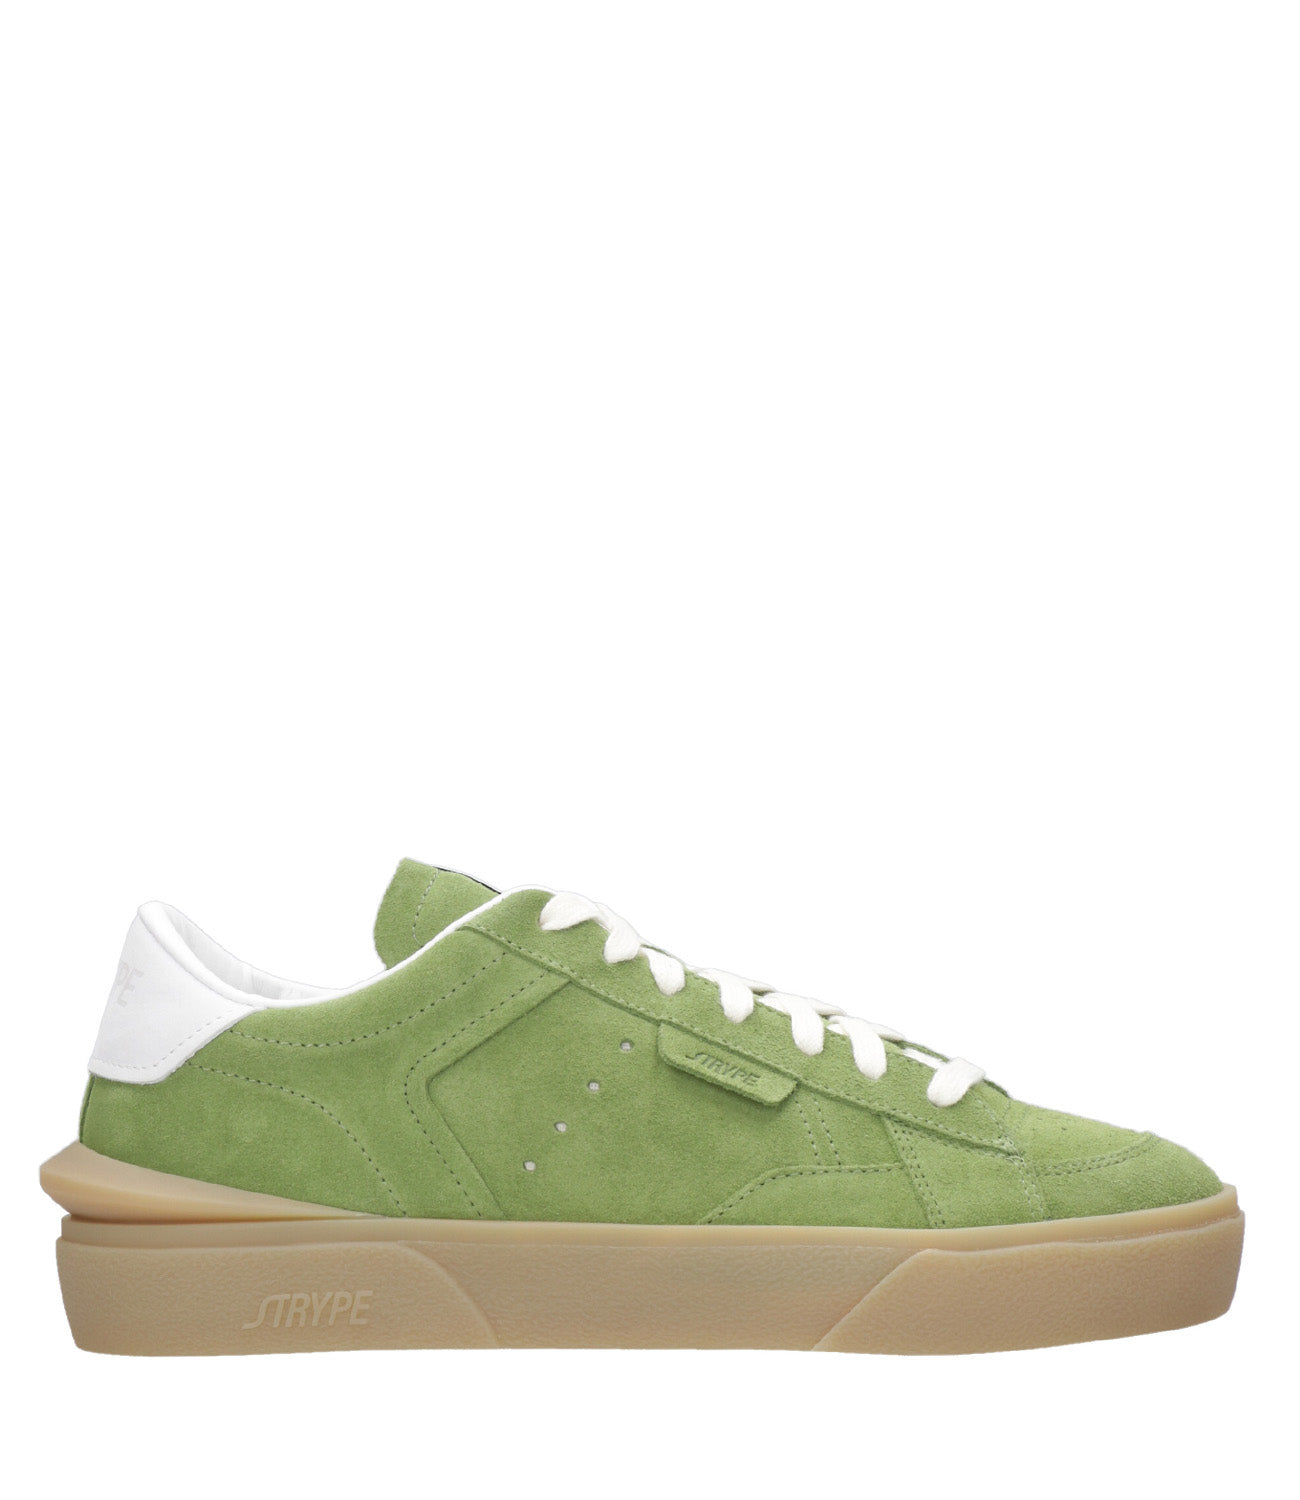 Strype | Low Green Basketball Sneakers